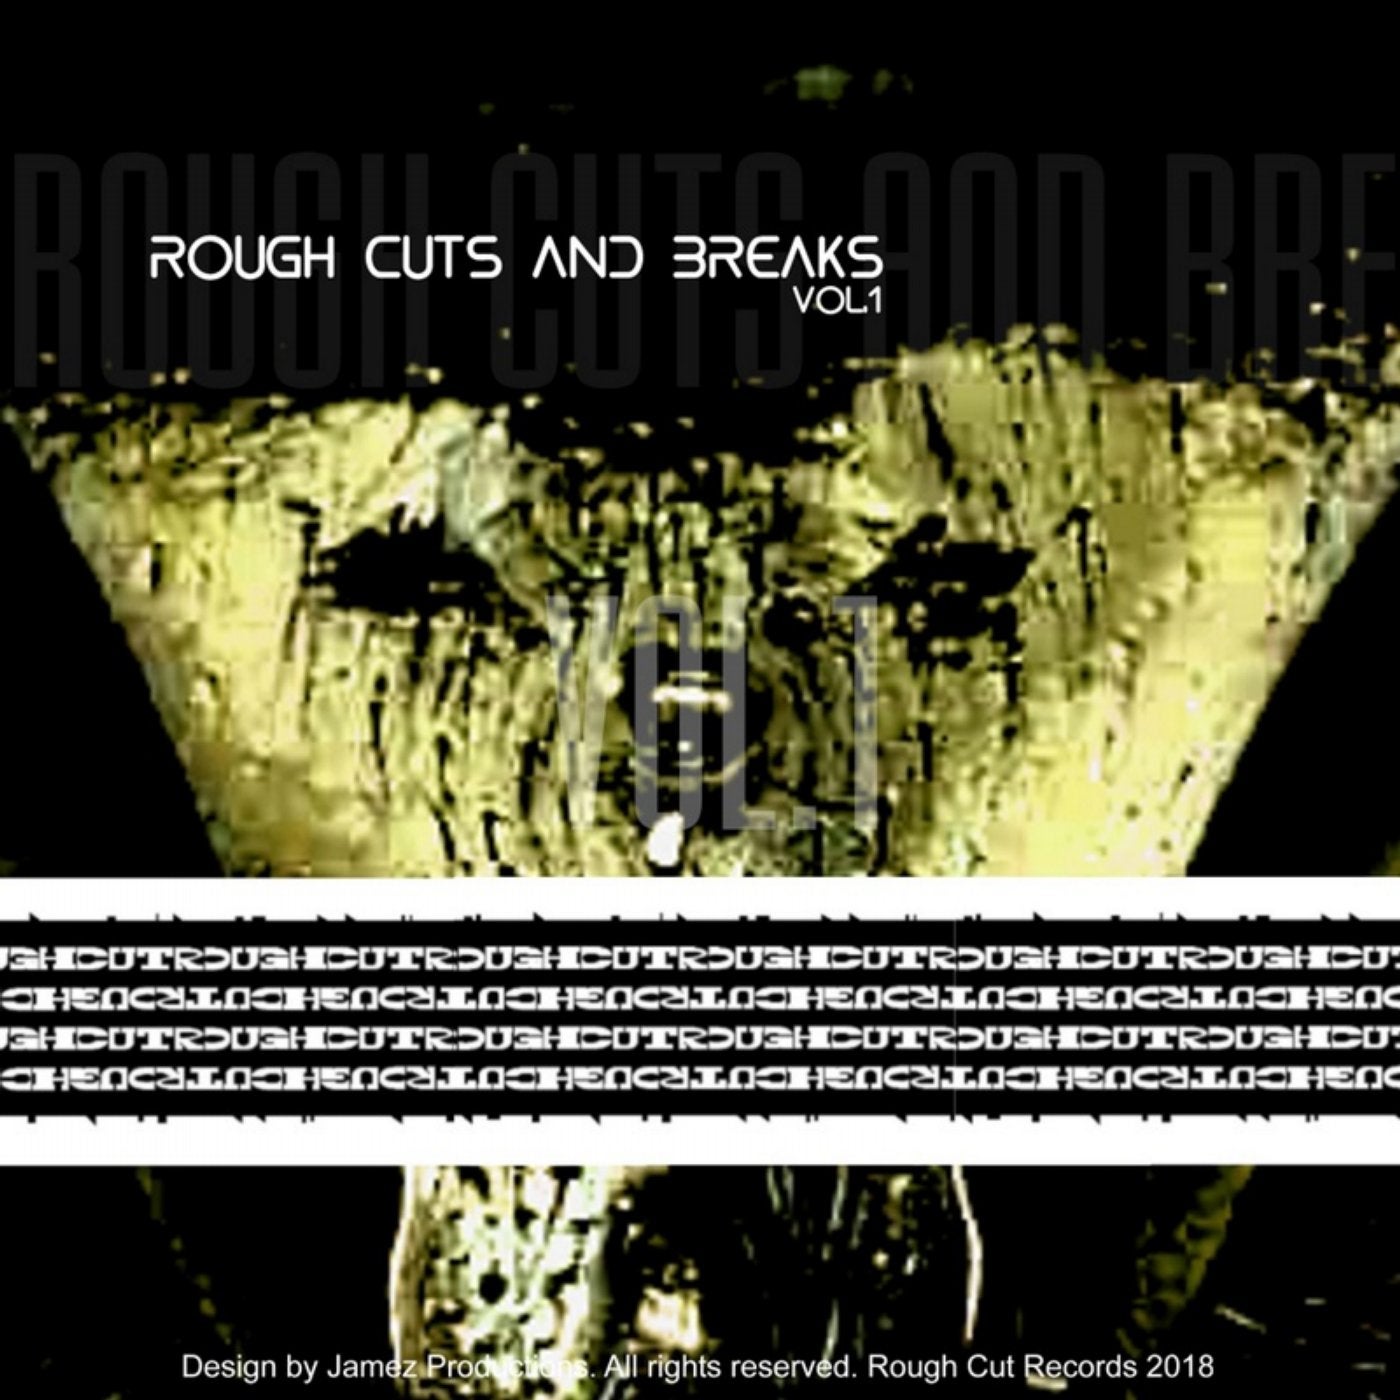 Rough Cuts and Breaks Vol. 1